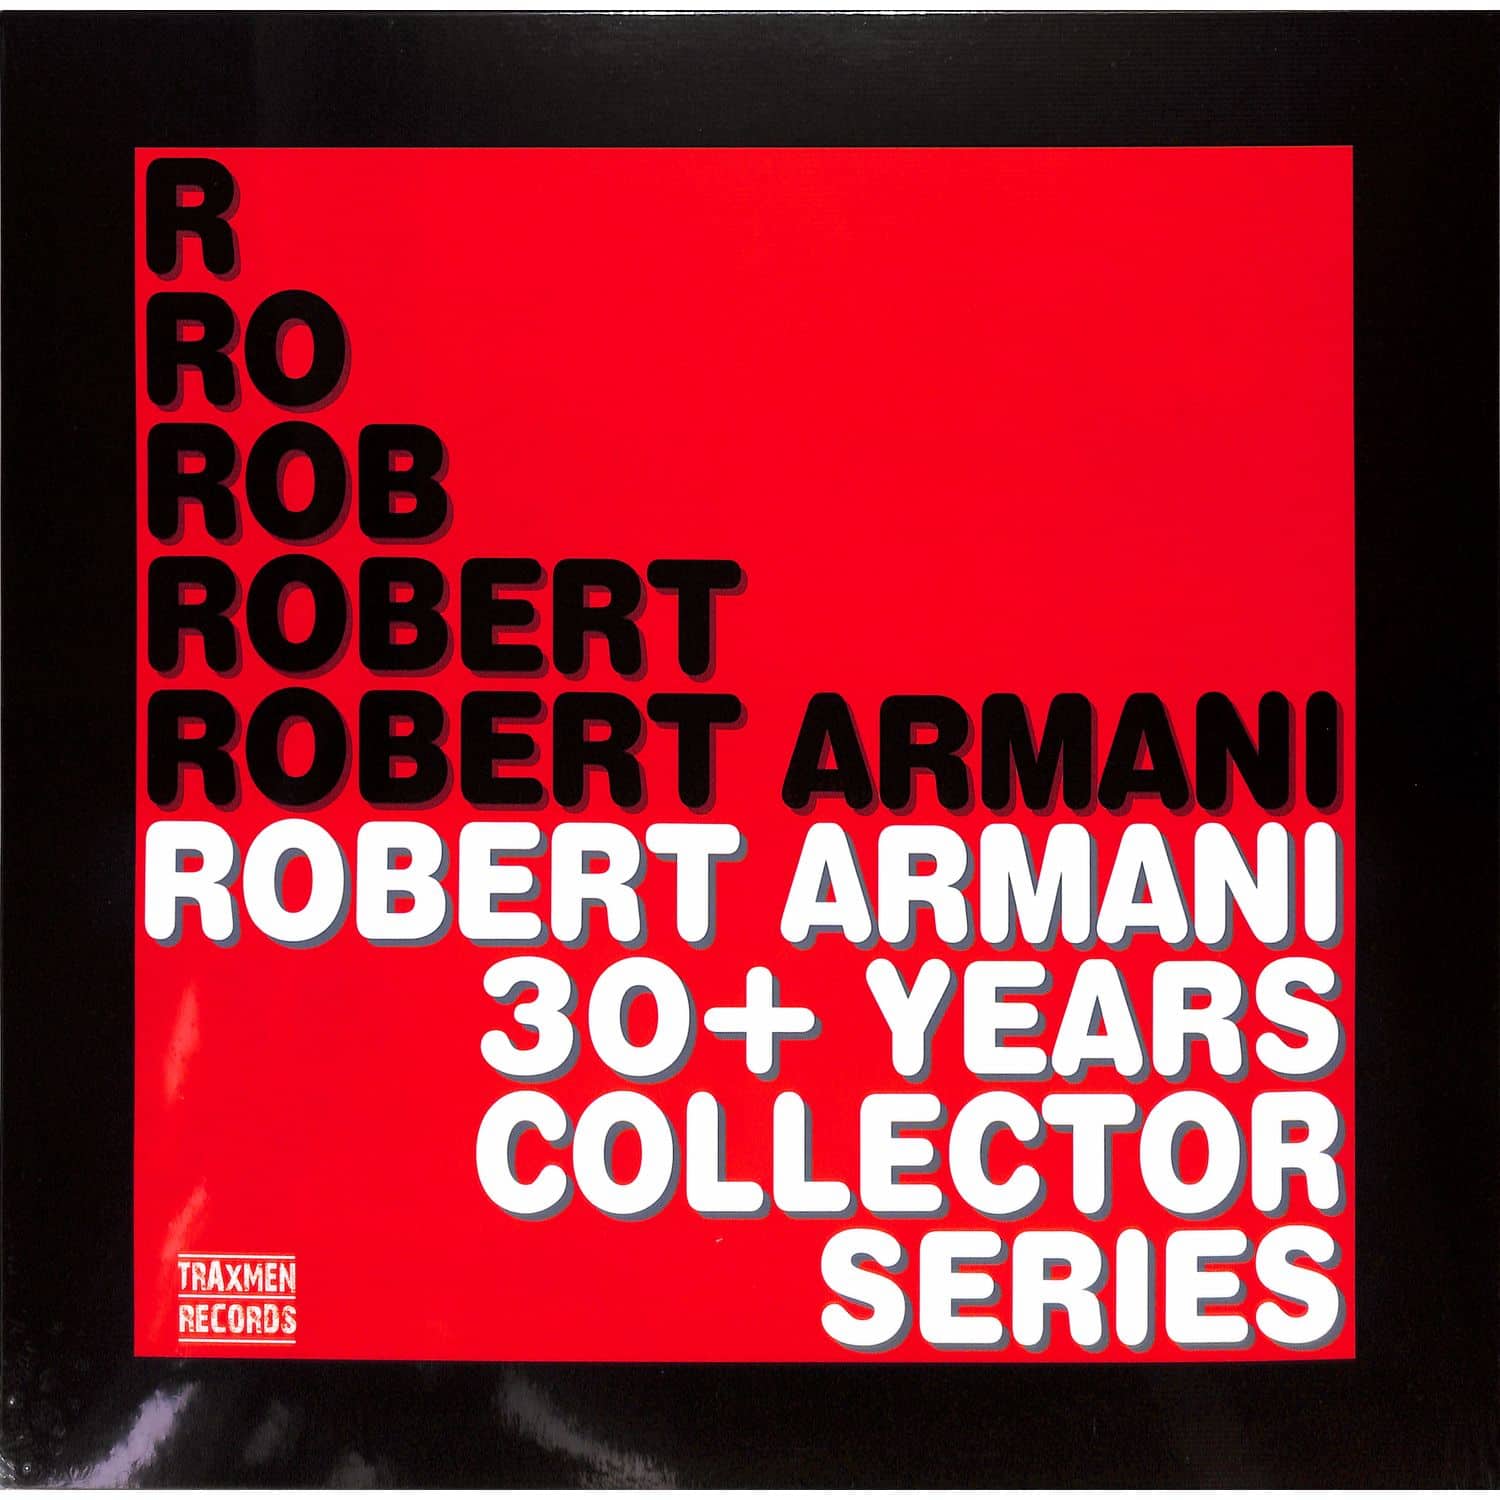 Robert Armani - ROBERT ARMANI 30+ YEARS COLLECTOR SERIES 